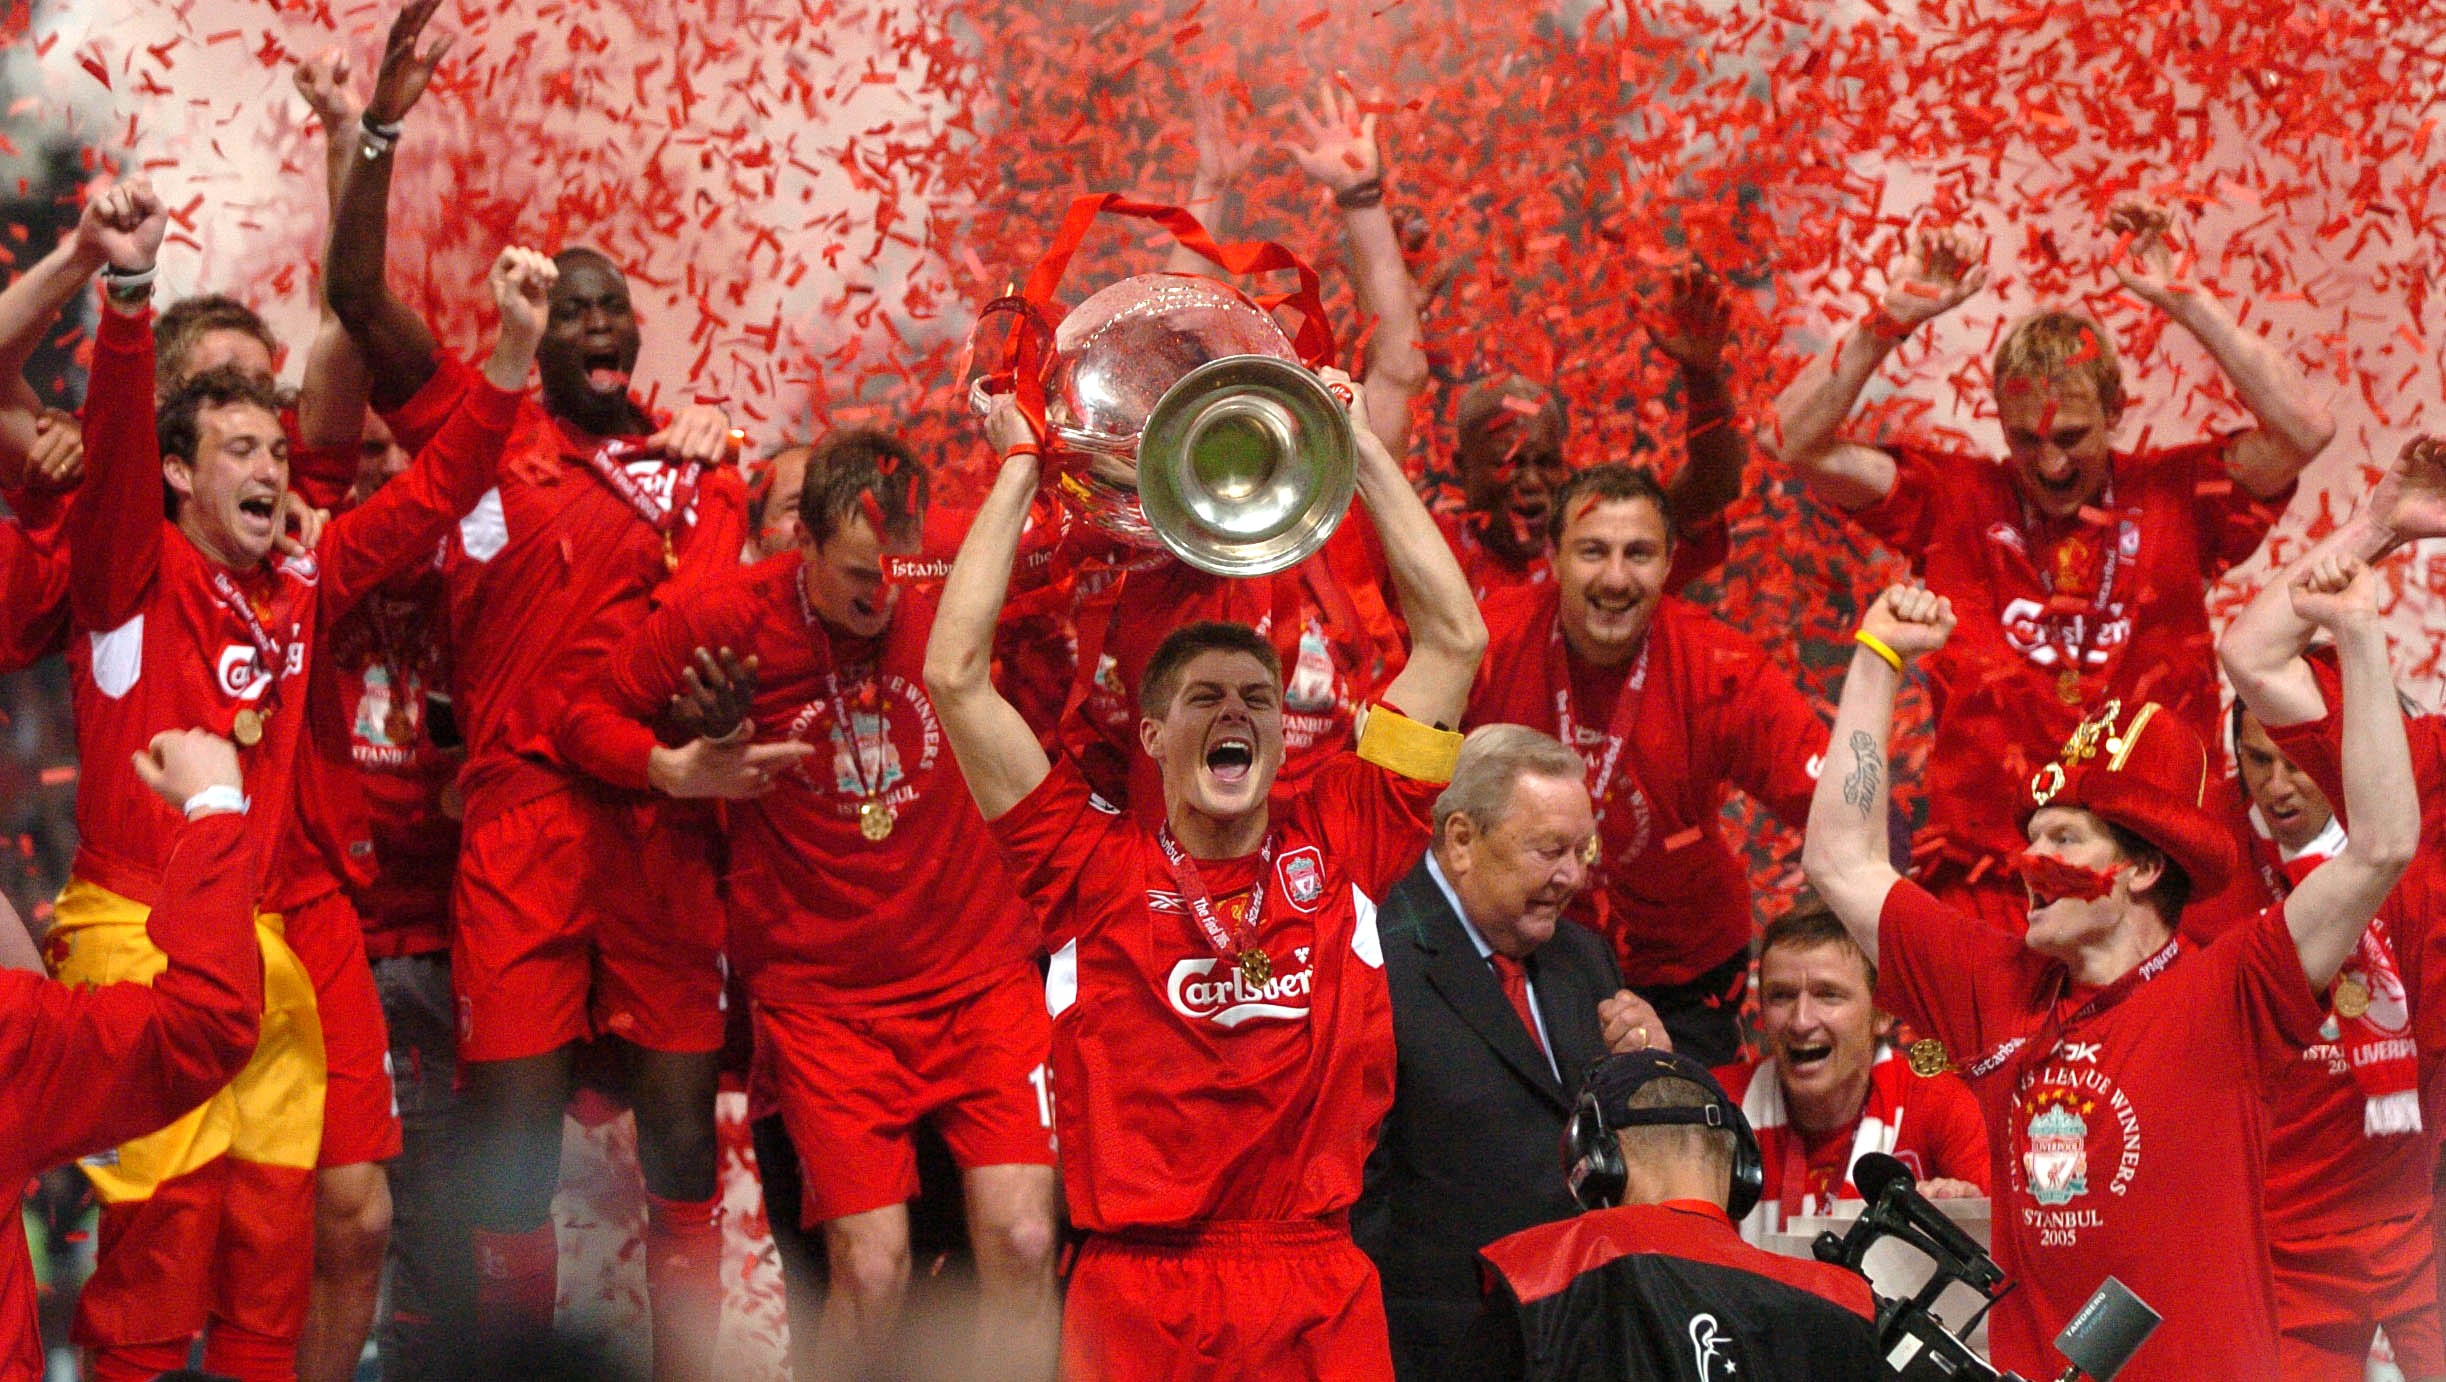 People 2446x1382 Liverpool FC Champions League men Steven Gerrard happy sport soccer Group of Men